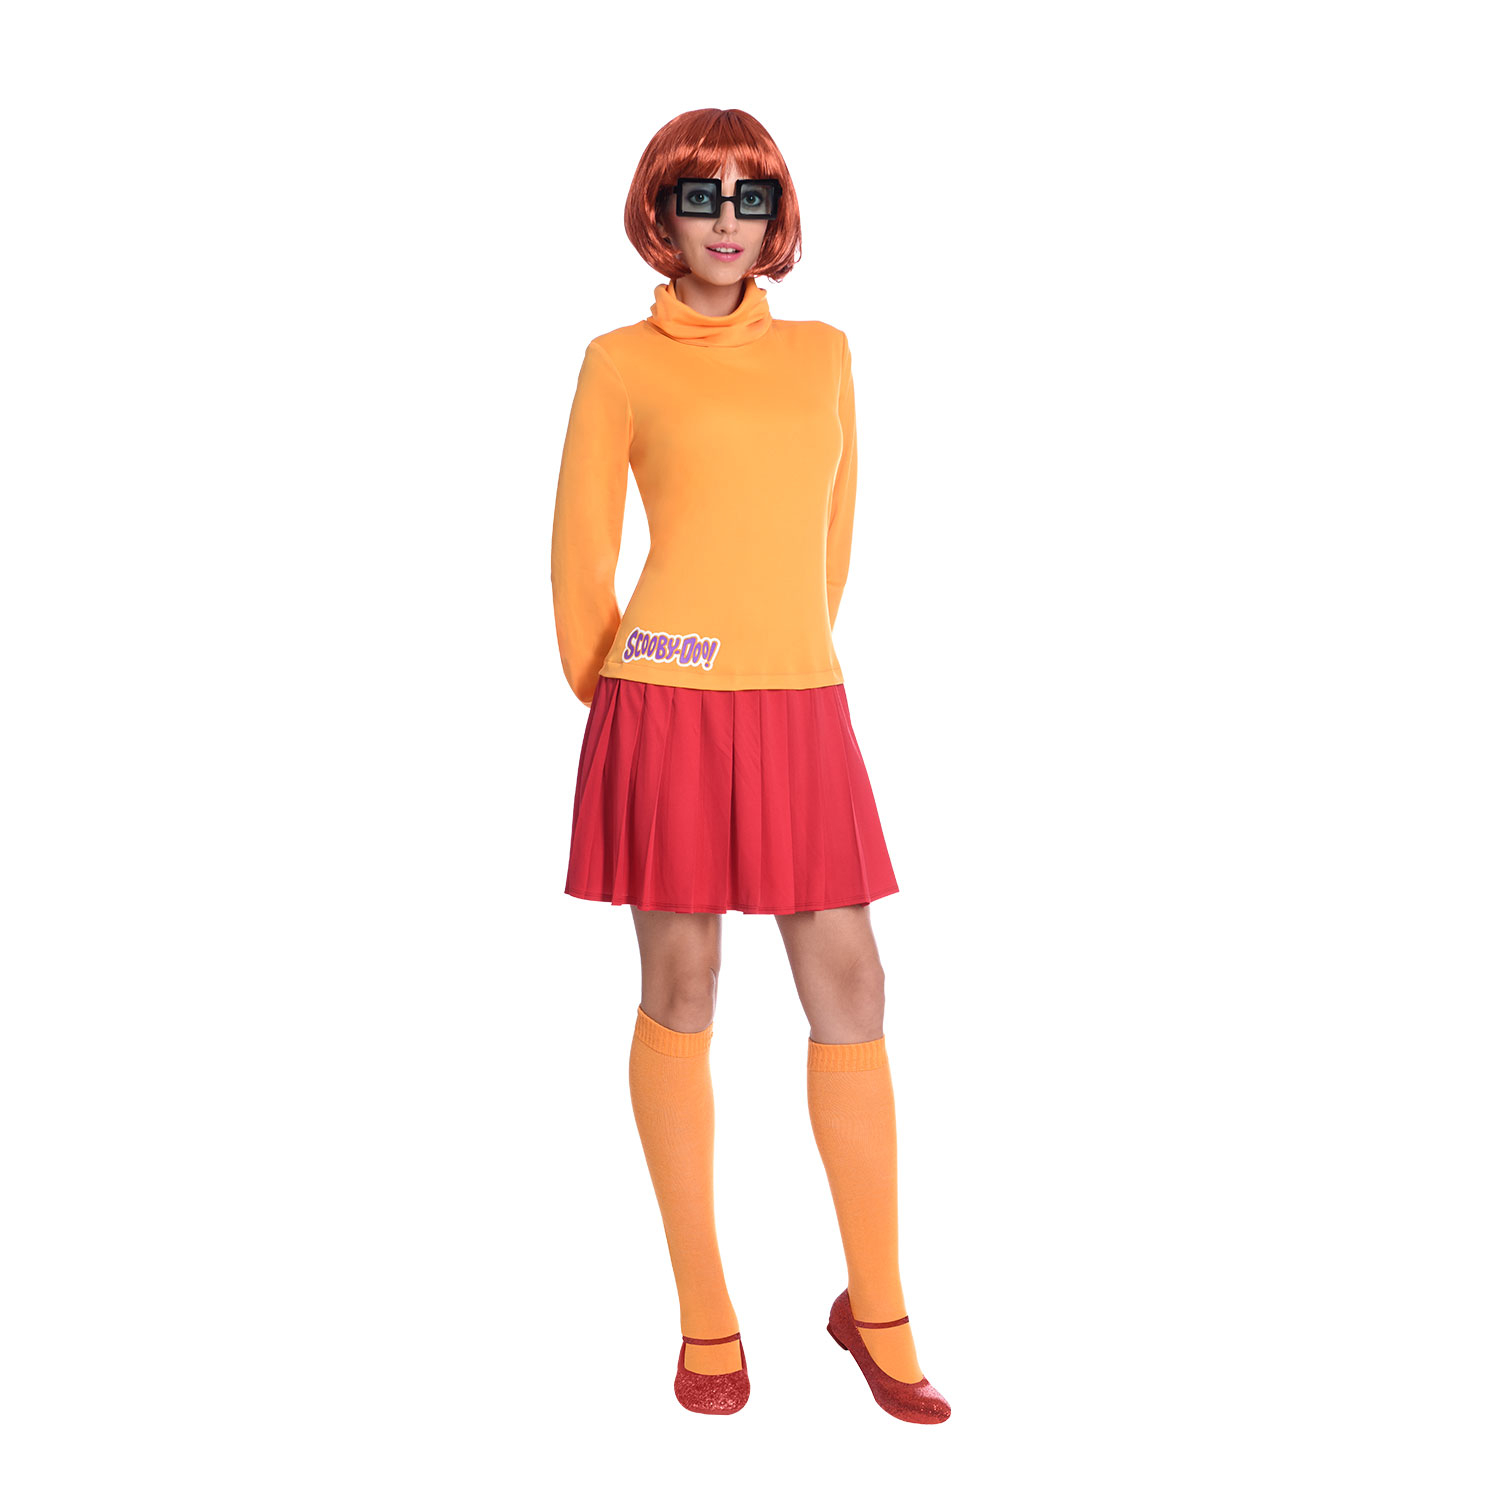 Velma Costume - Size 16-18 - 1 PC : Amscan International